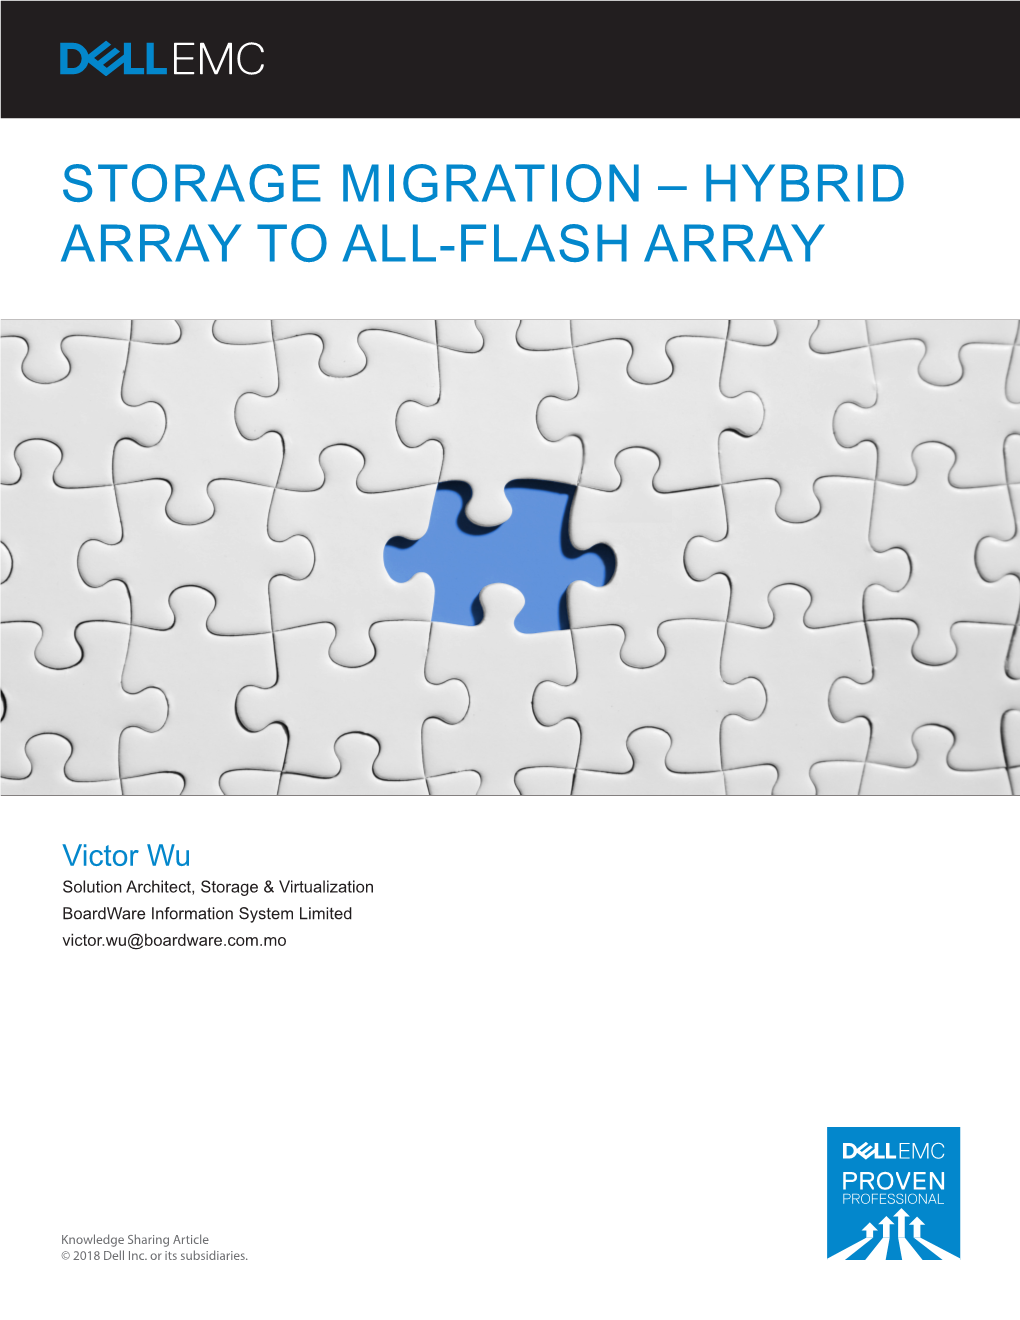 Storage Migration – Hybrid Array to All-Flash Array